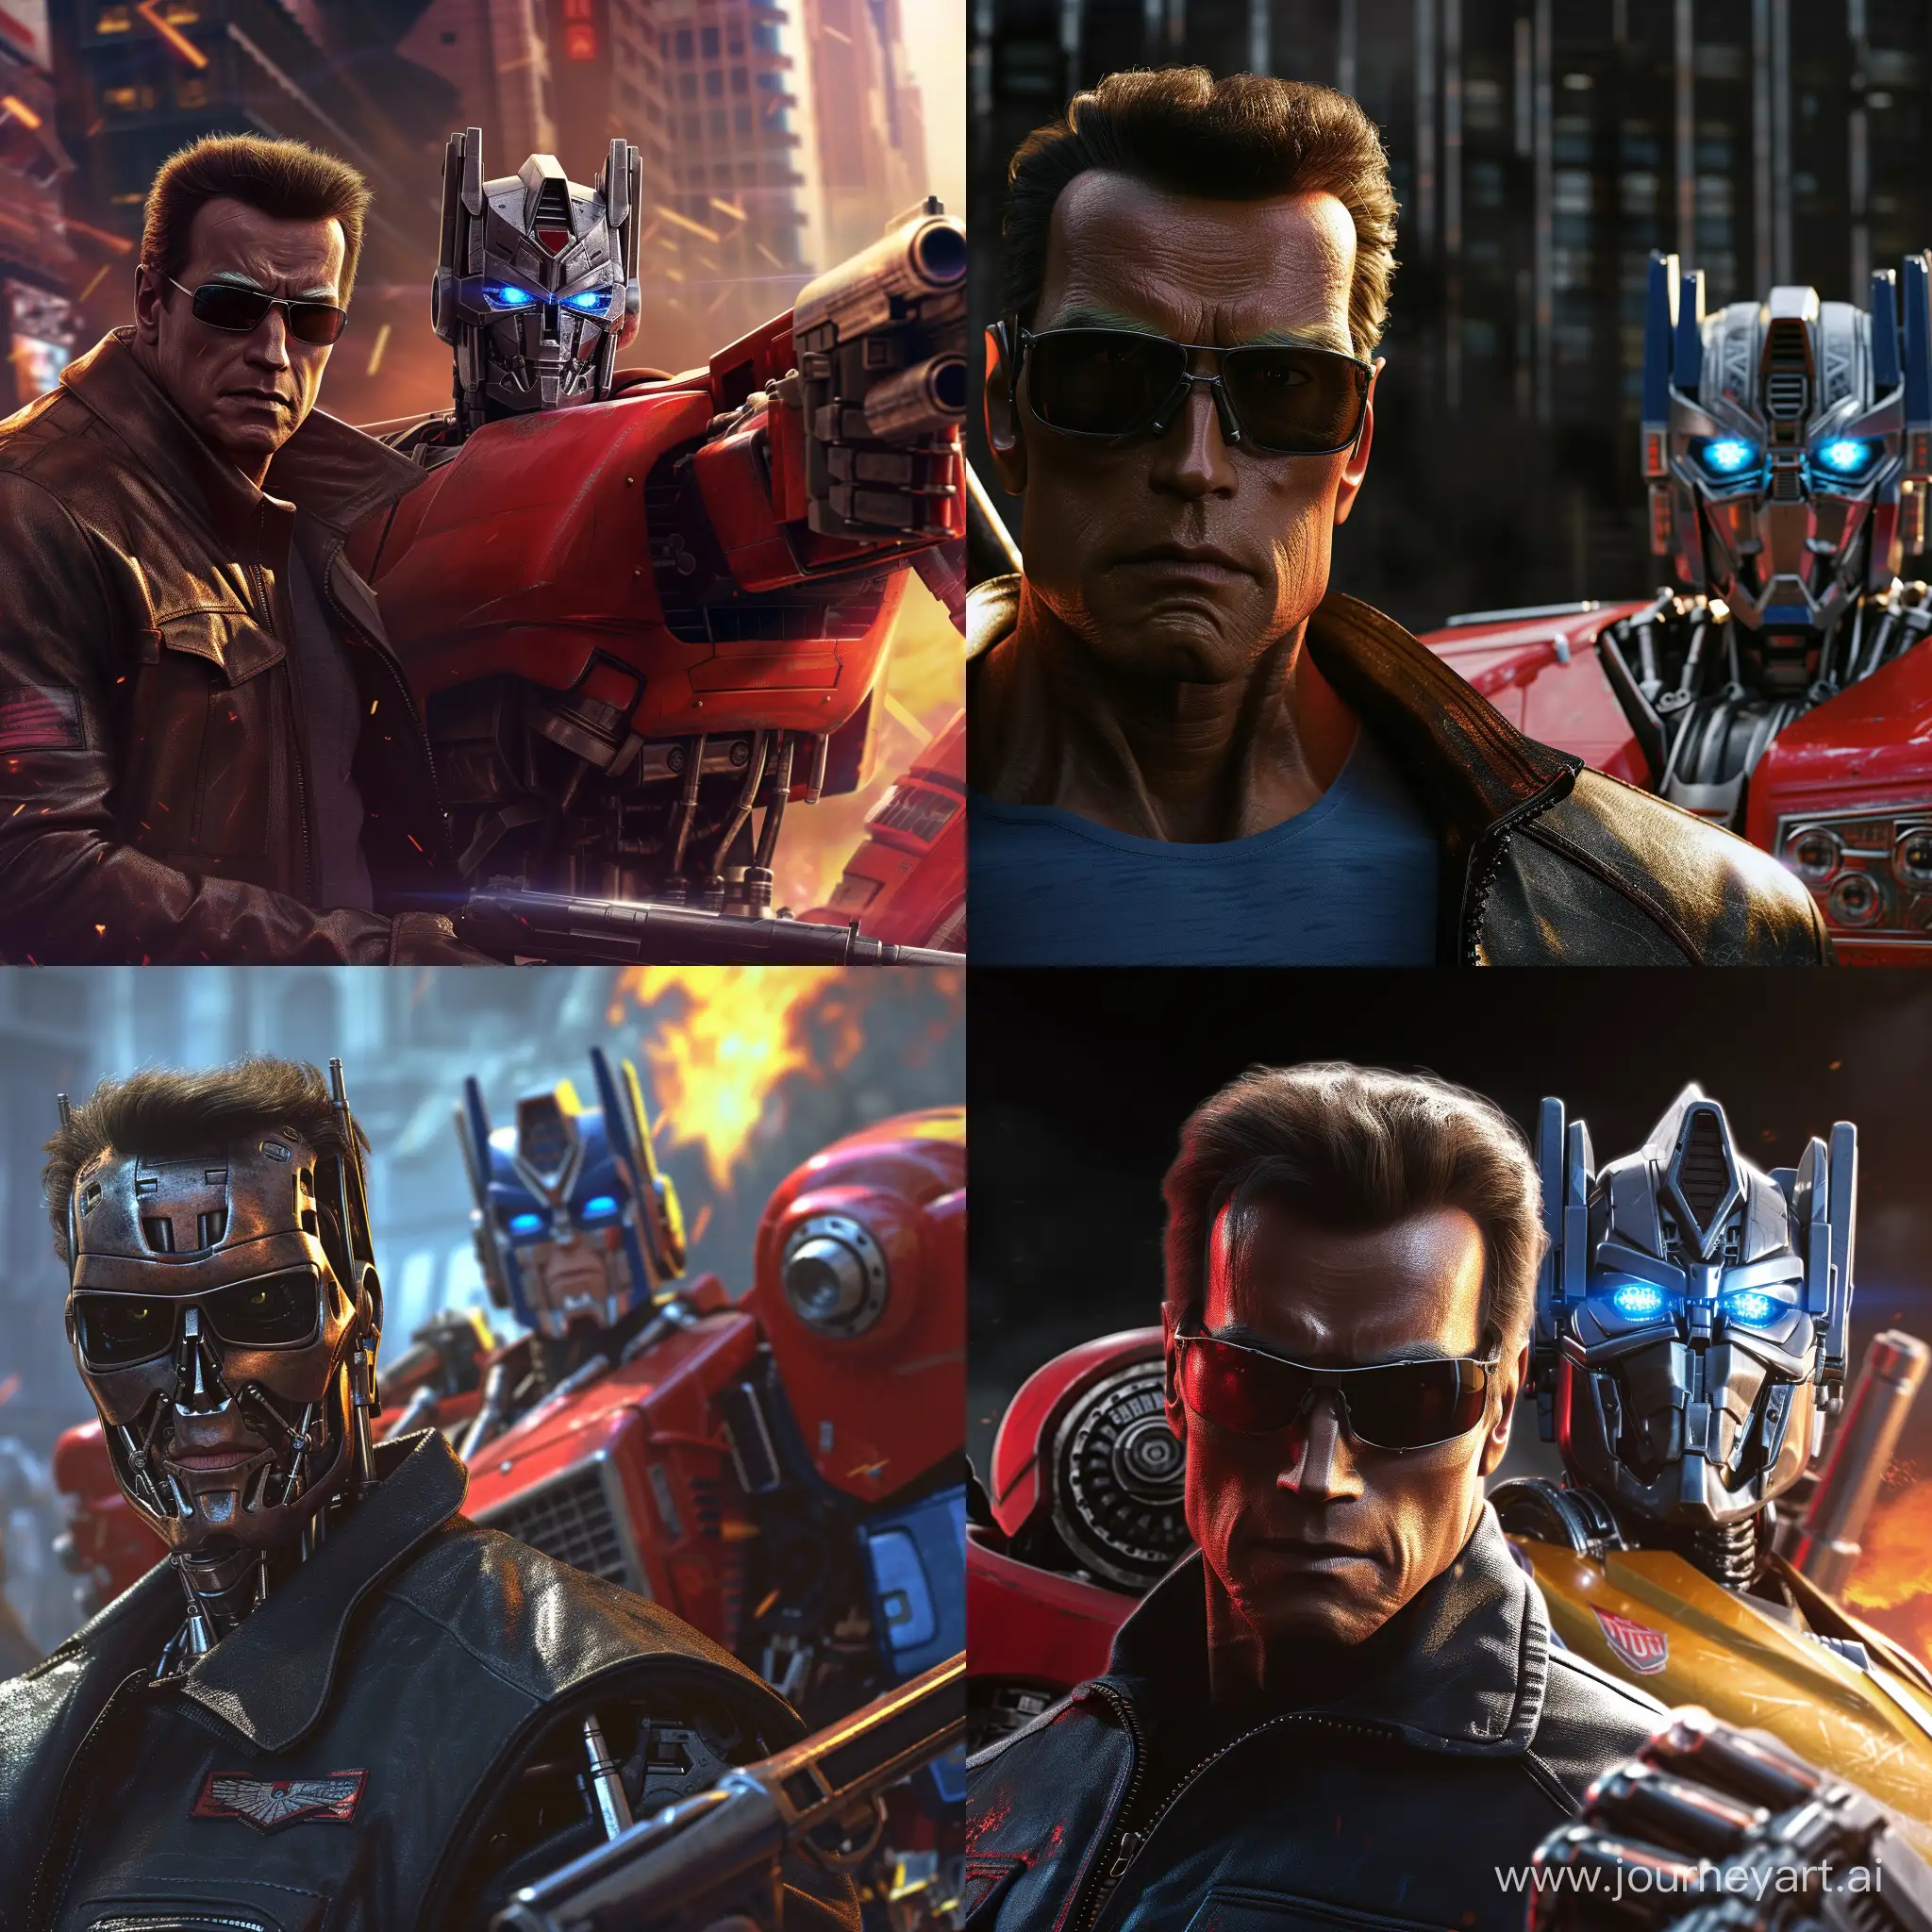 Epic-Showdown-Terminator-vs-Optimus-Prime-in-Stunning-4K-HighResolution-Detail